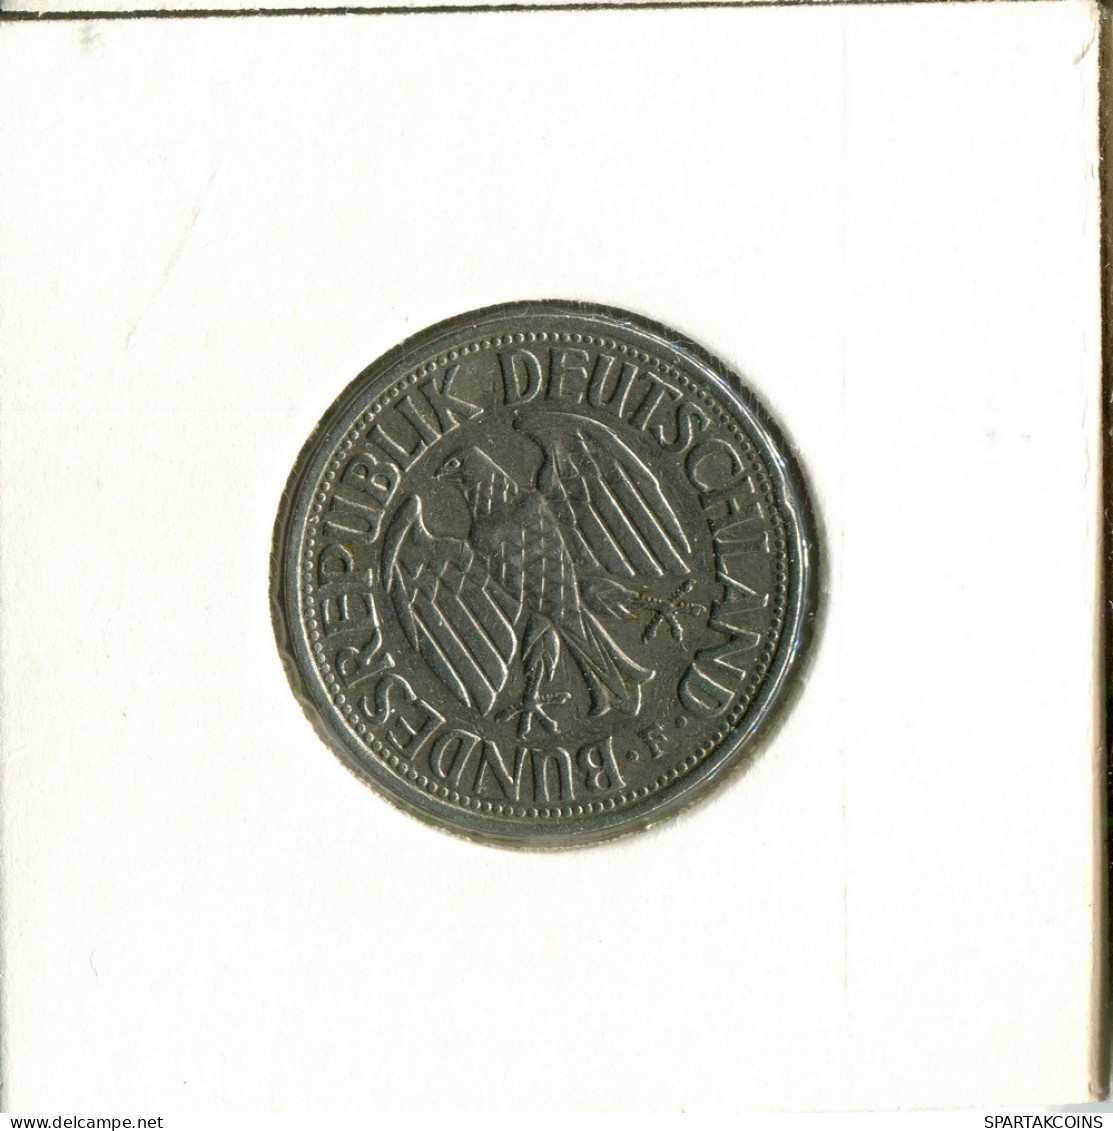 1 DM 1954 F BRD DEUTSCHLAND Münze GERMANY #AU741.D - 1 Mark